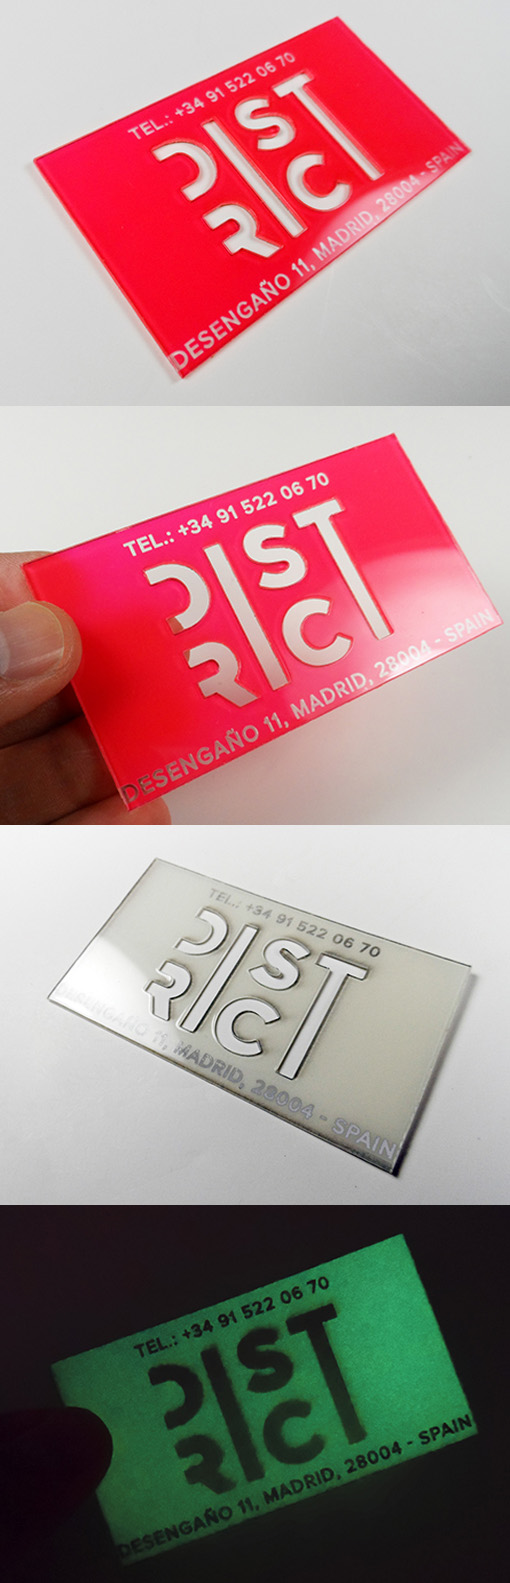 Amazing Glow In The Dark Laser Cut Plastic Business Card Design